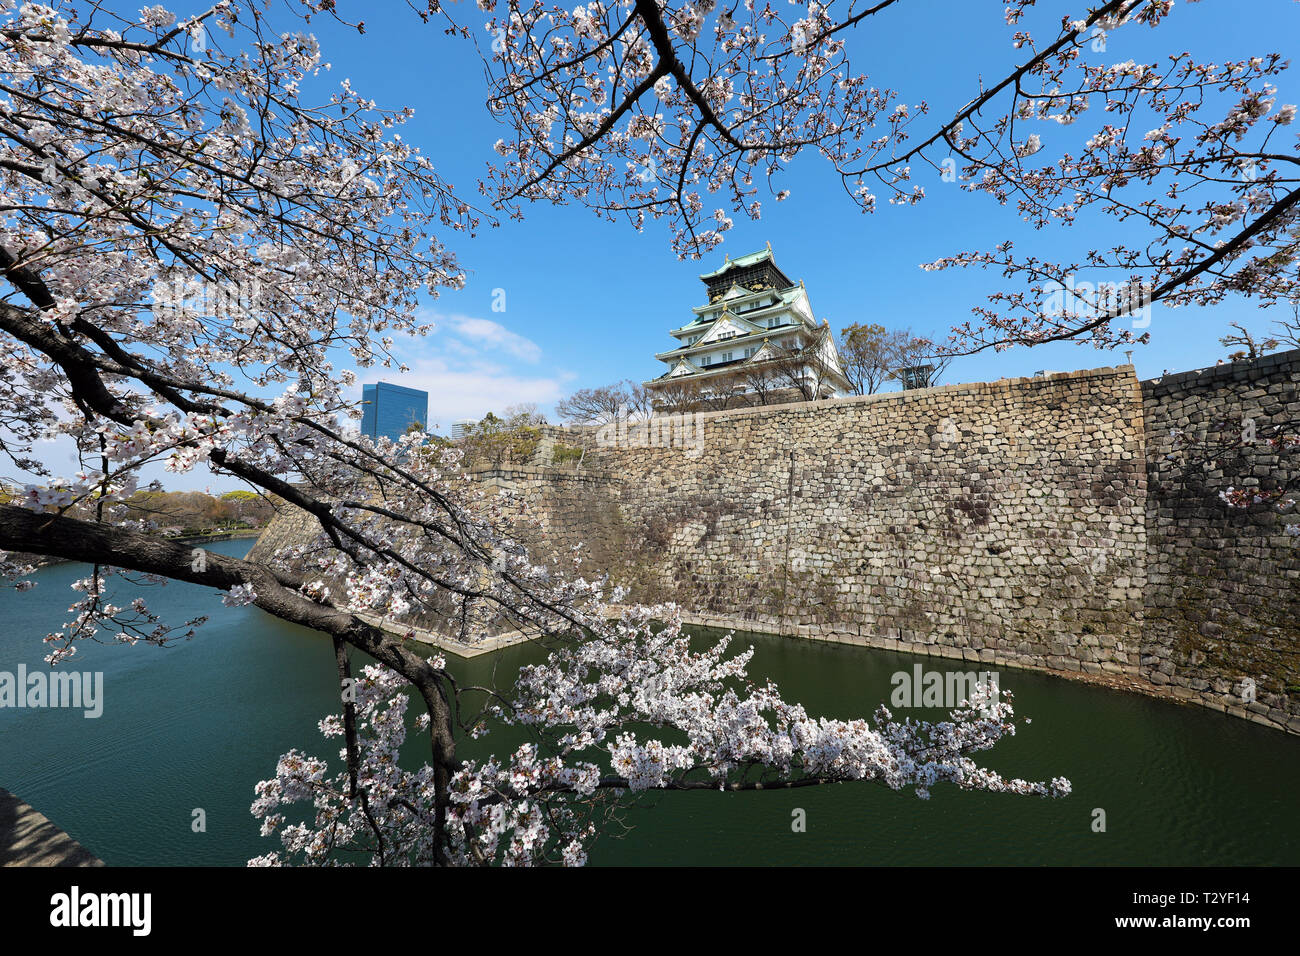 Osaka Castle seen through the branches of flowering cherry trees during Cherry Blossom season, Osaka, Japan Stock Photo